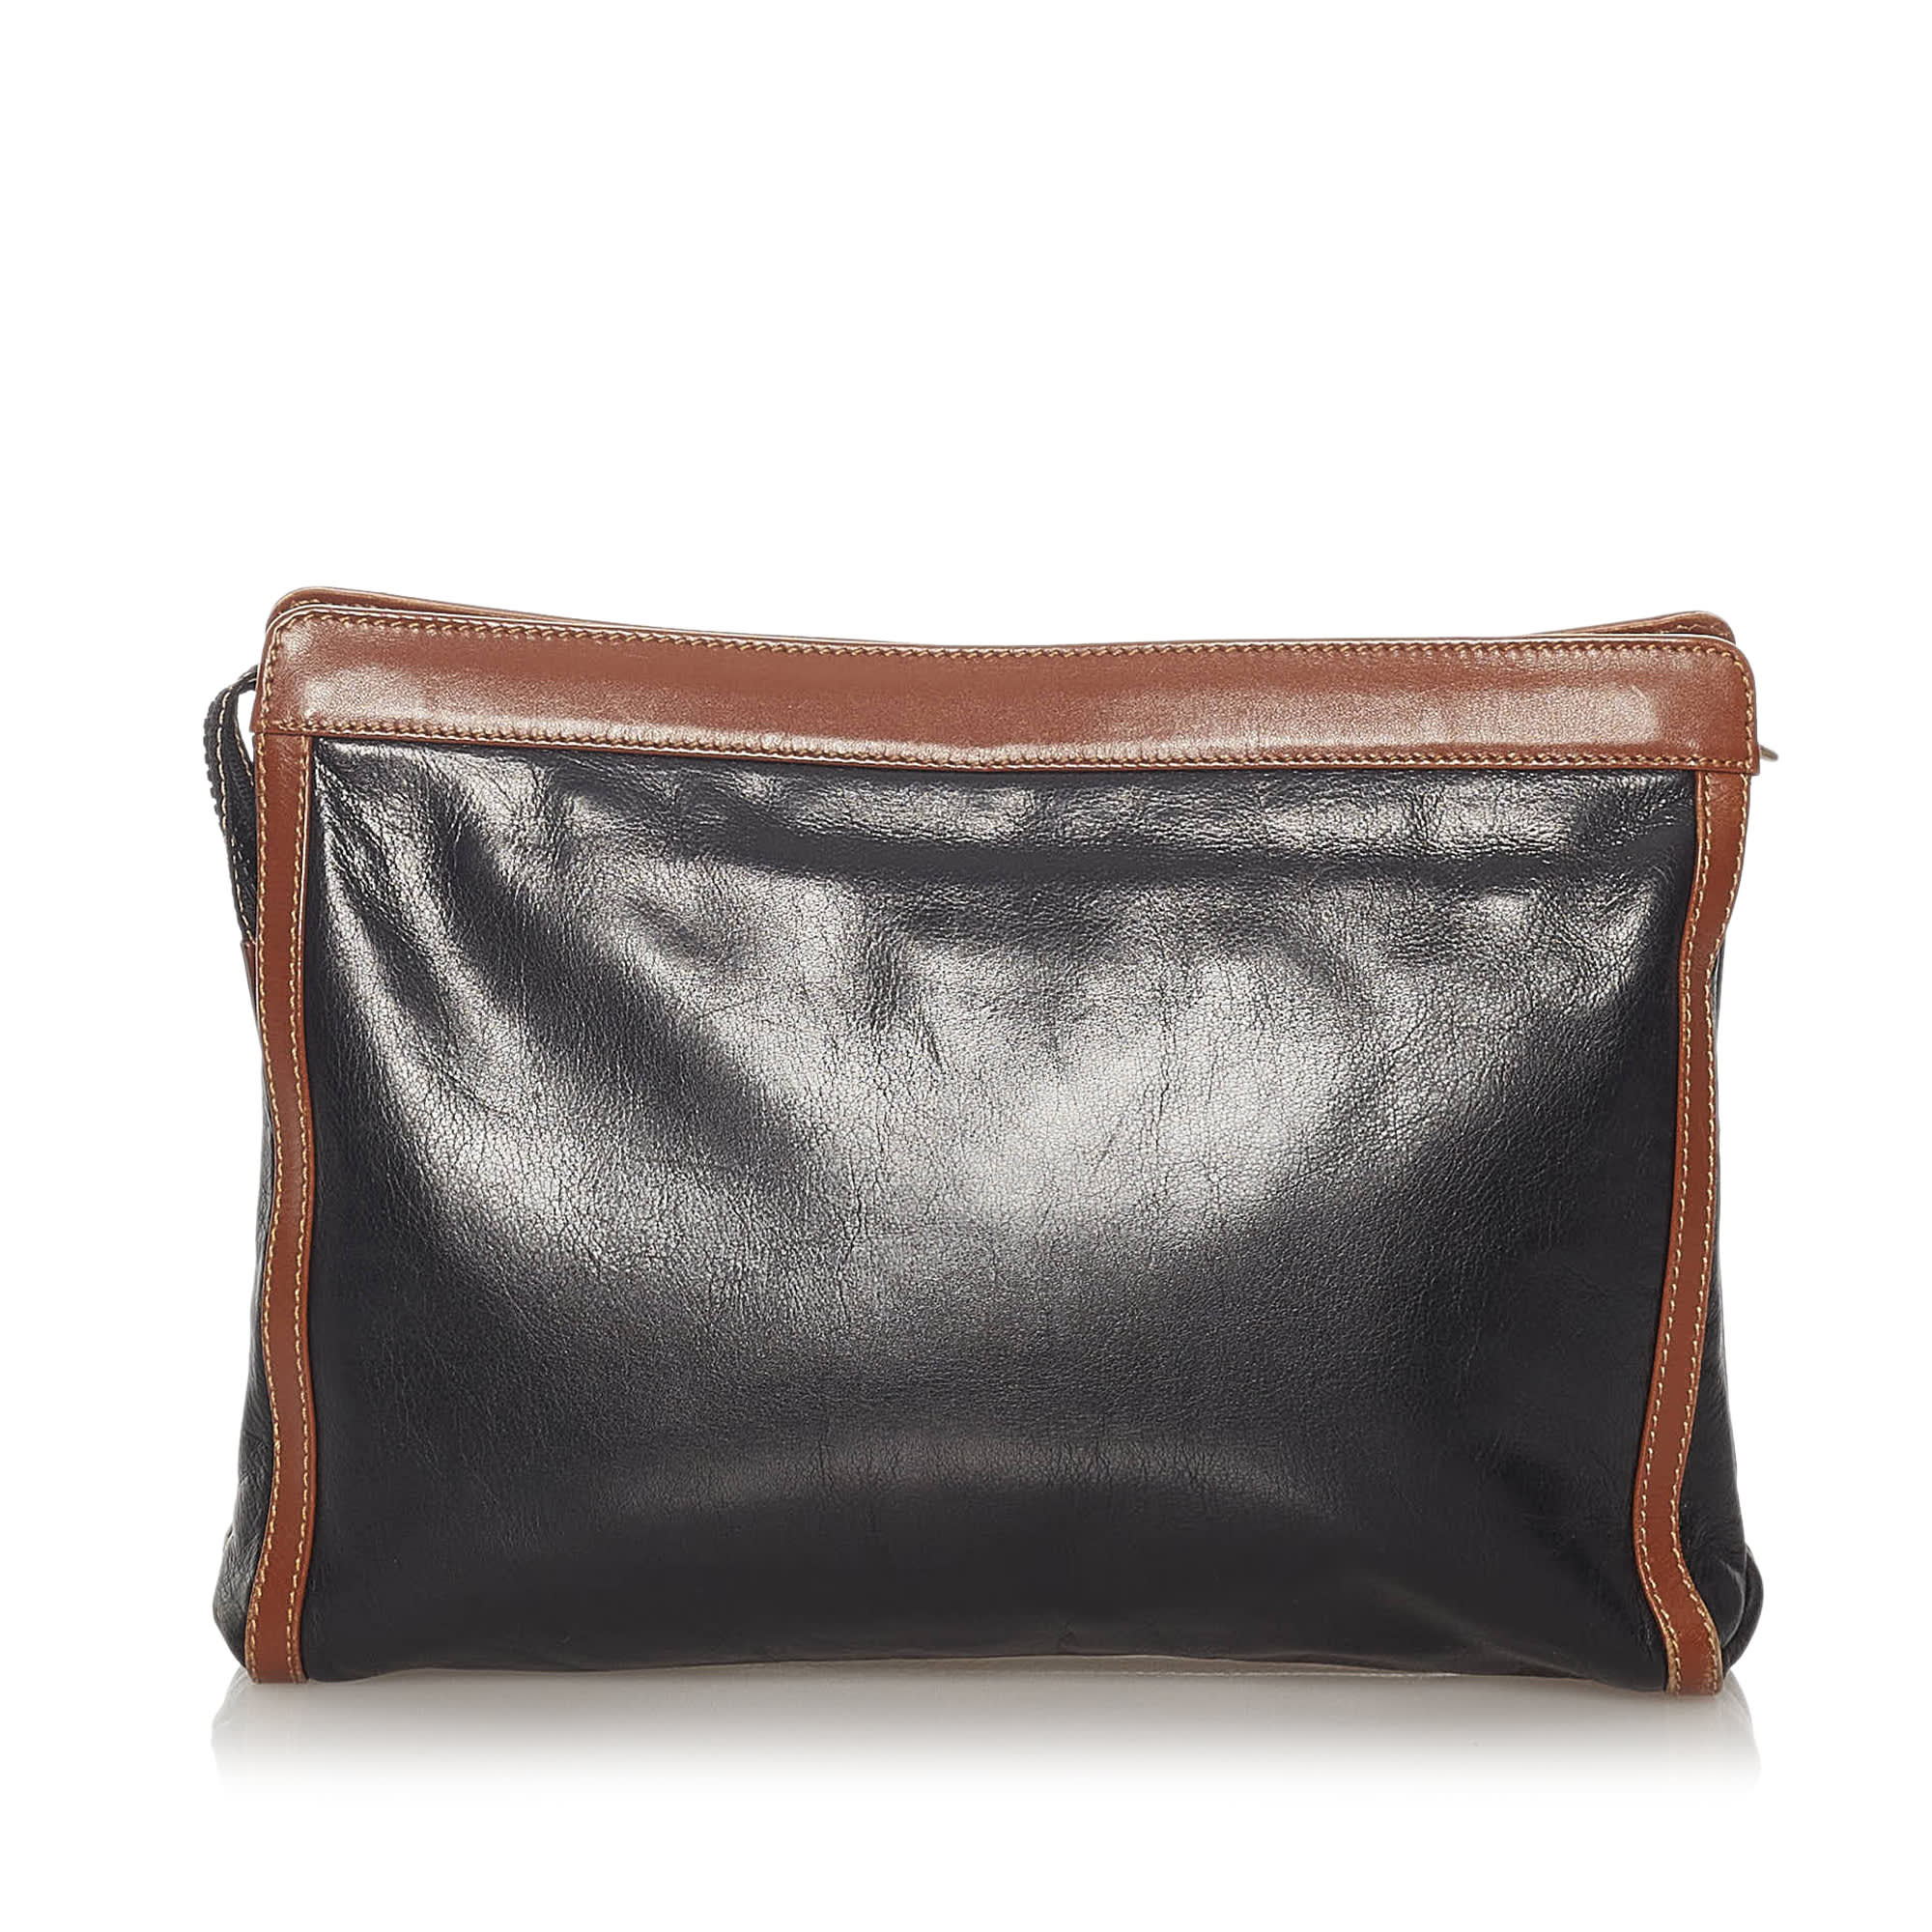 Celine Leather Clutch Bag, ONESIZE, black